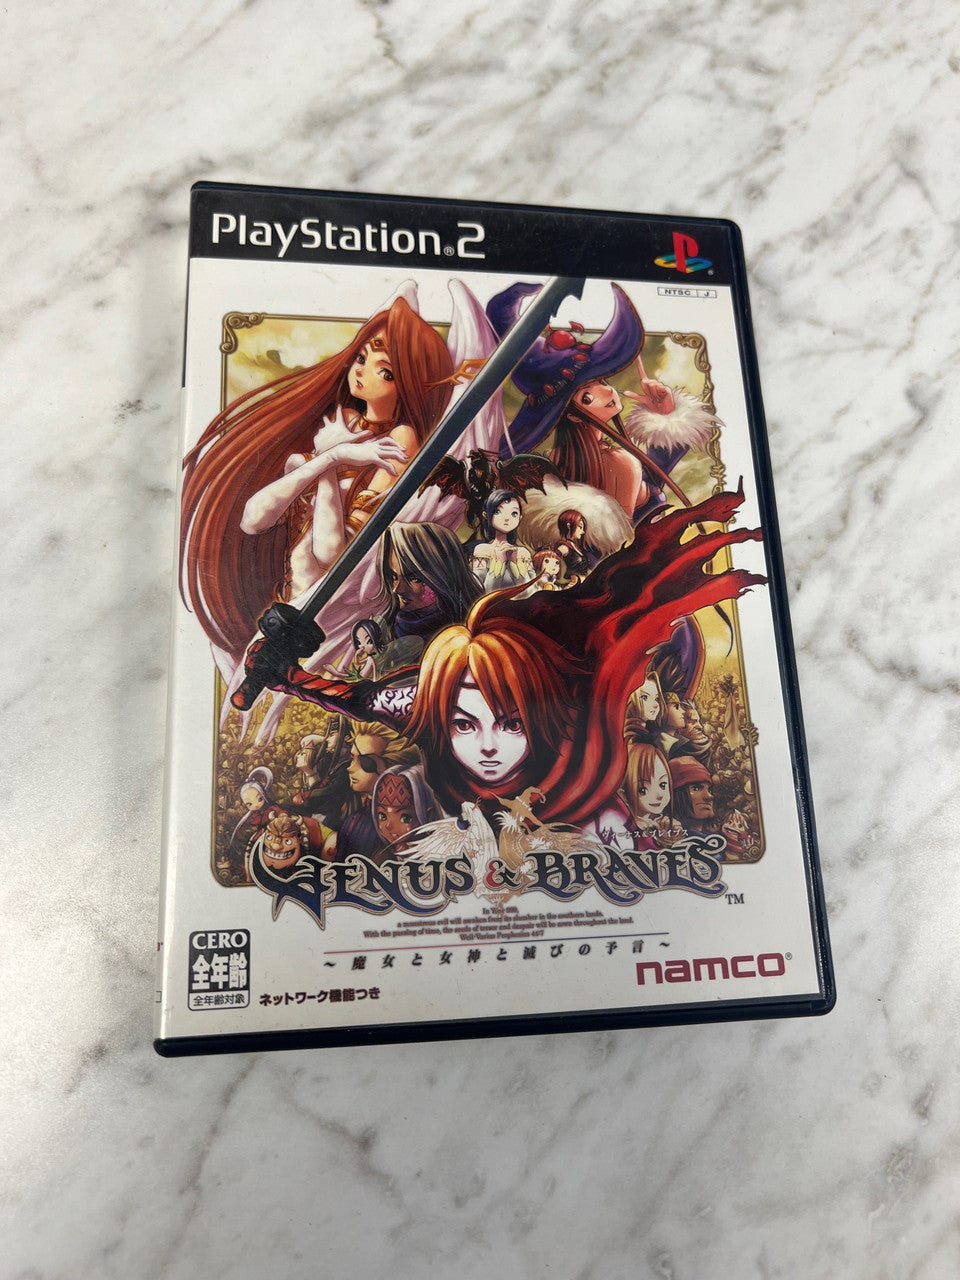 Venus & Braves Playstation 2 Japanese import Namco PS2